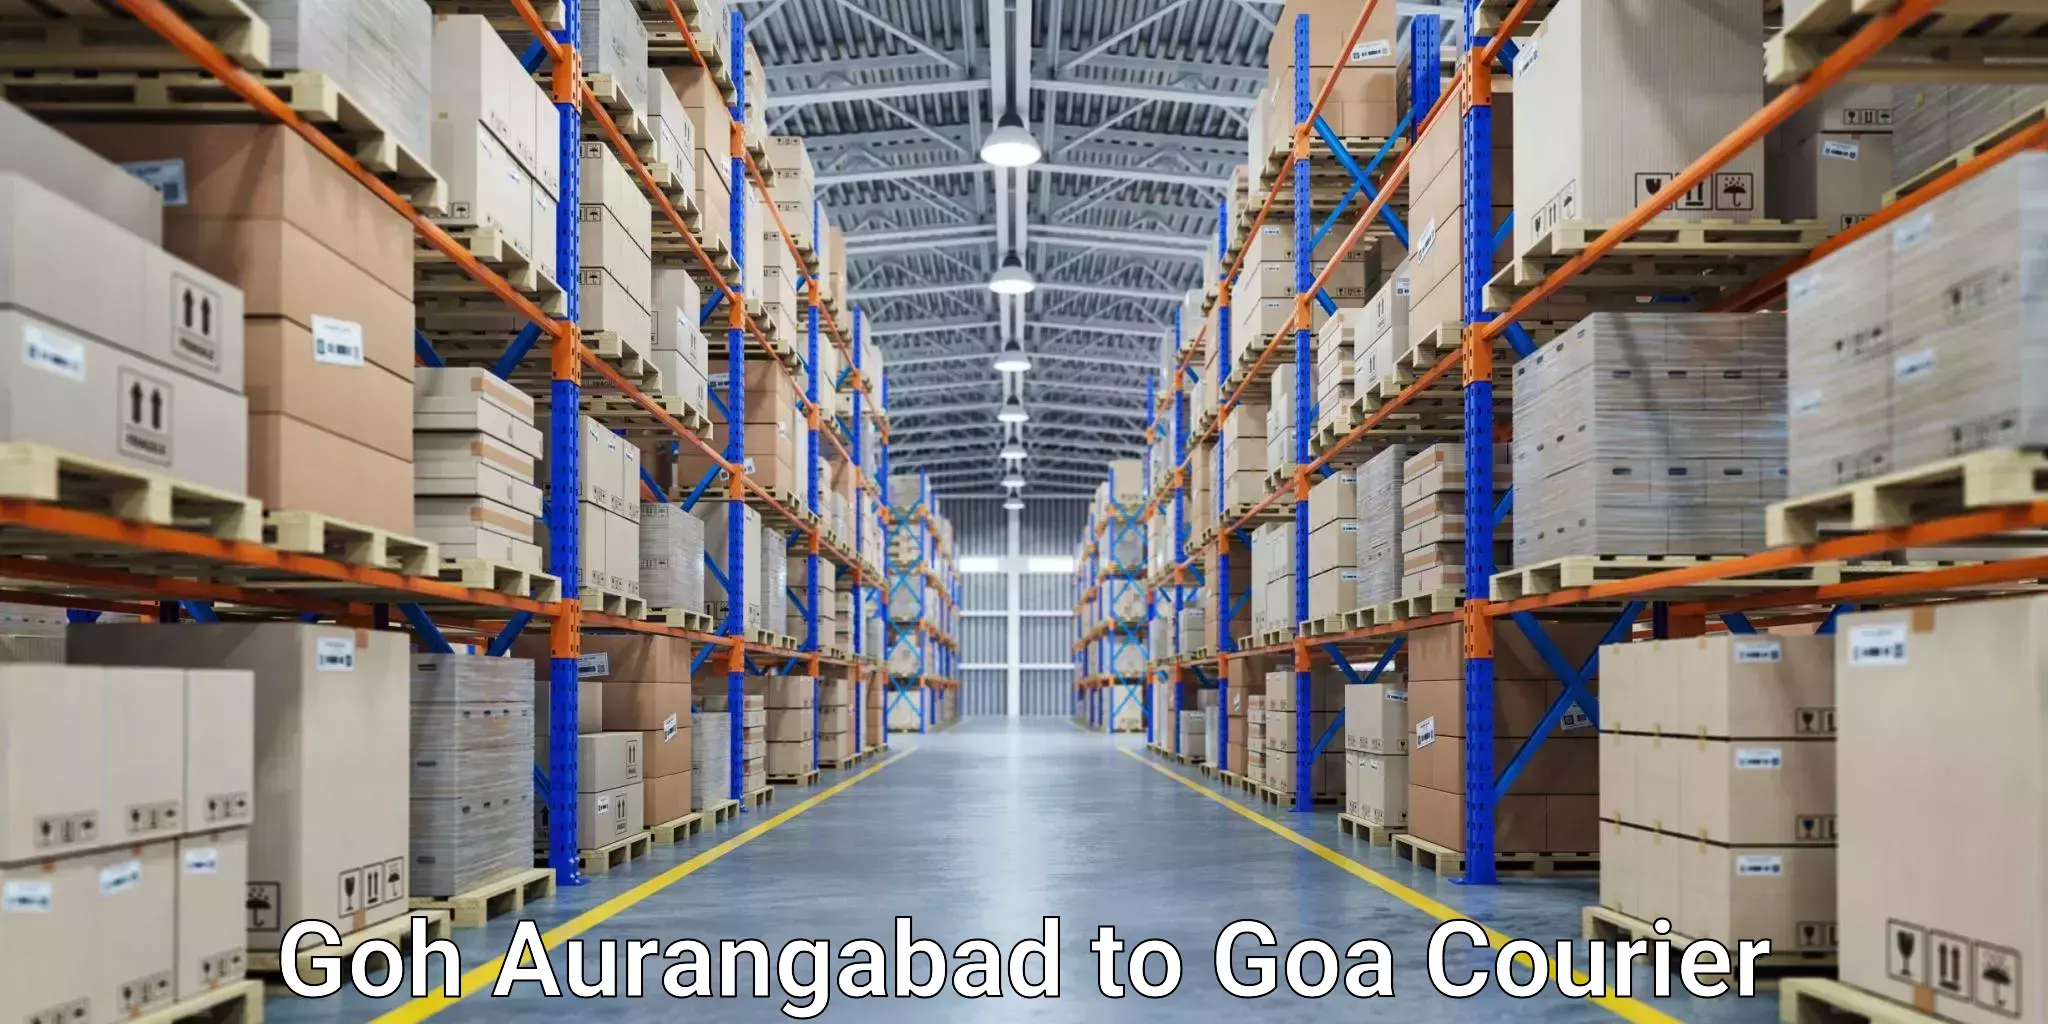 Multi-modal transportation Goh Aurangabad to Goa